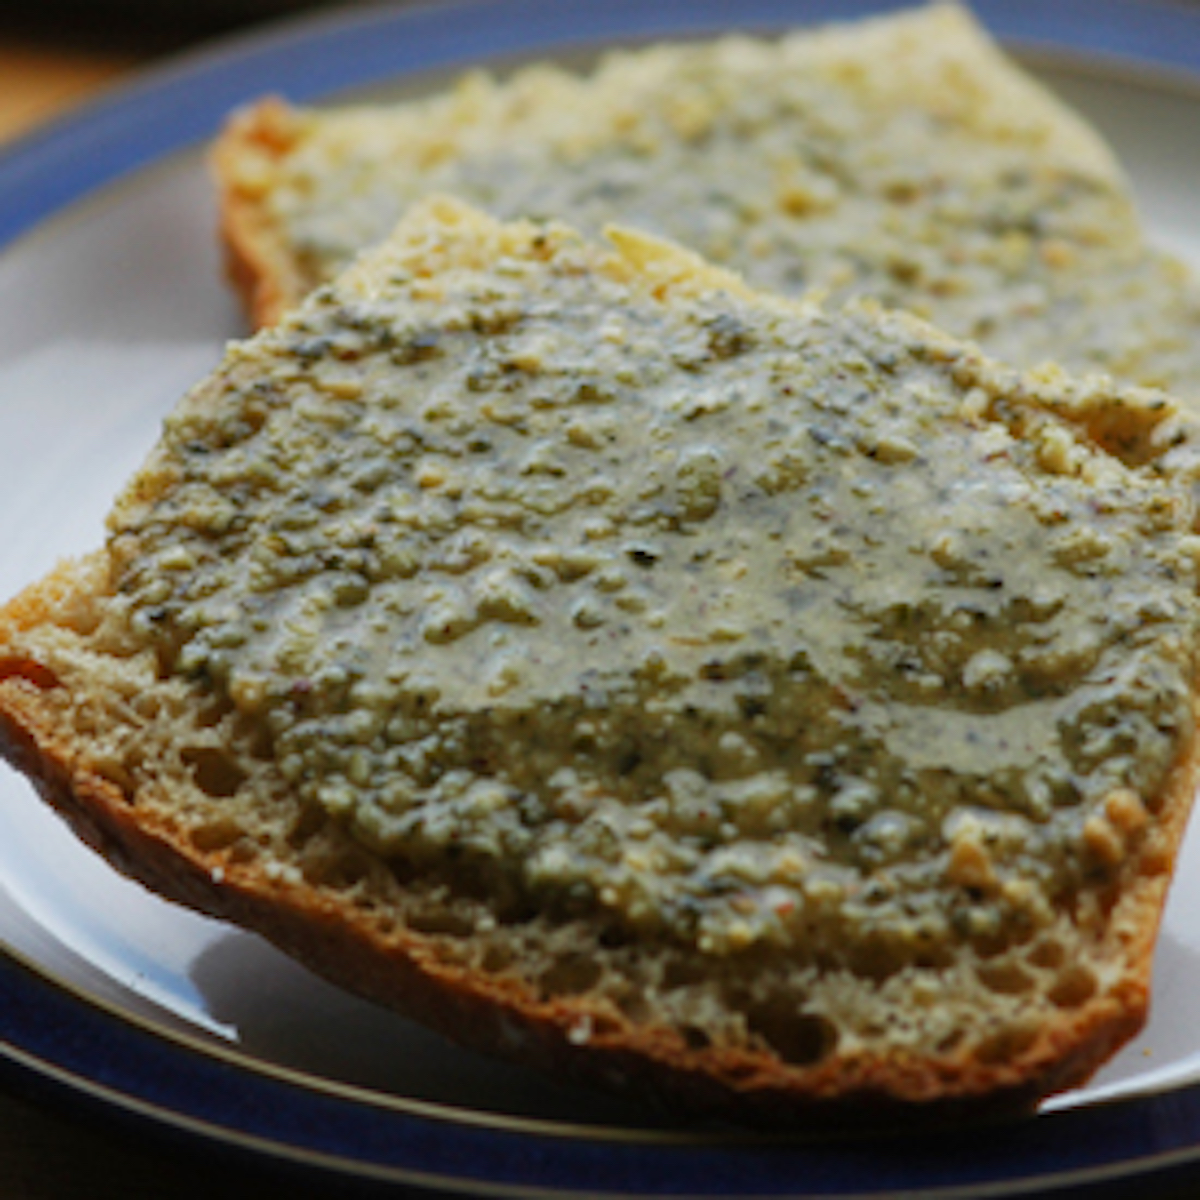 Brazil nut butter on a slice of toast, on a white plate.